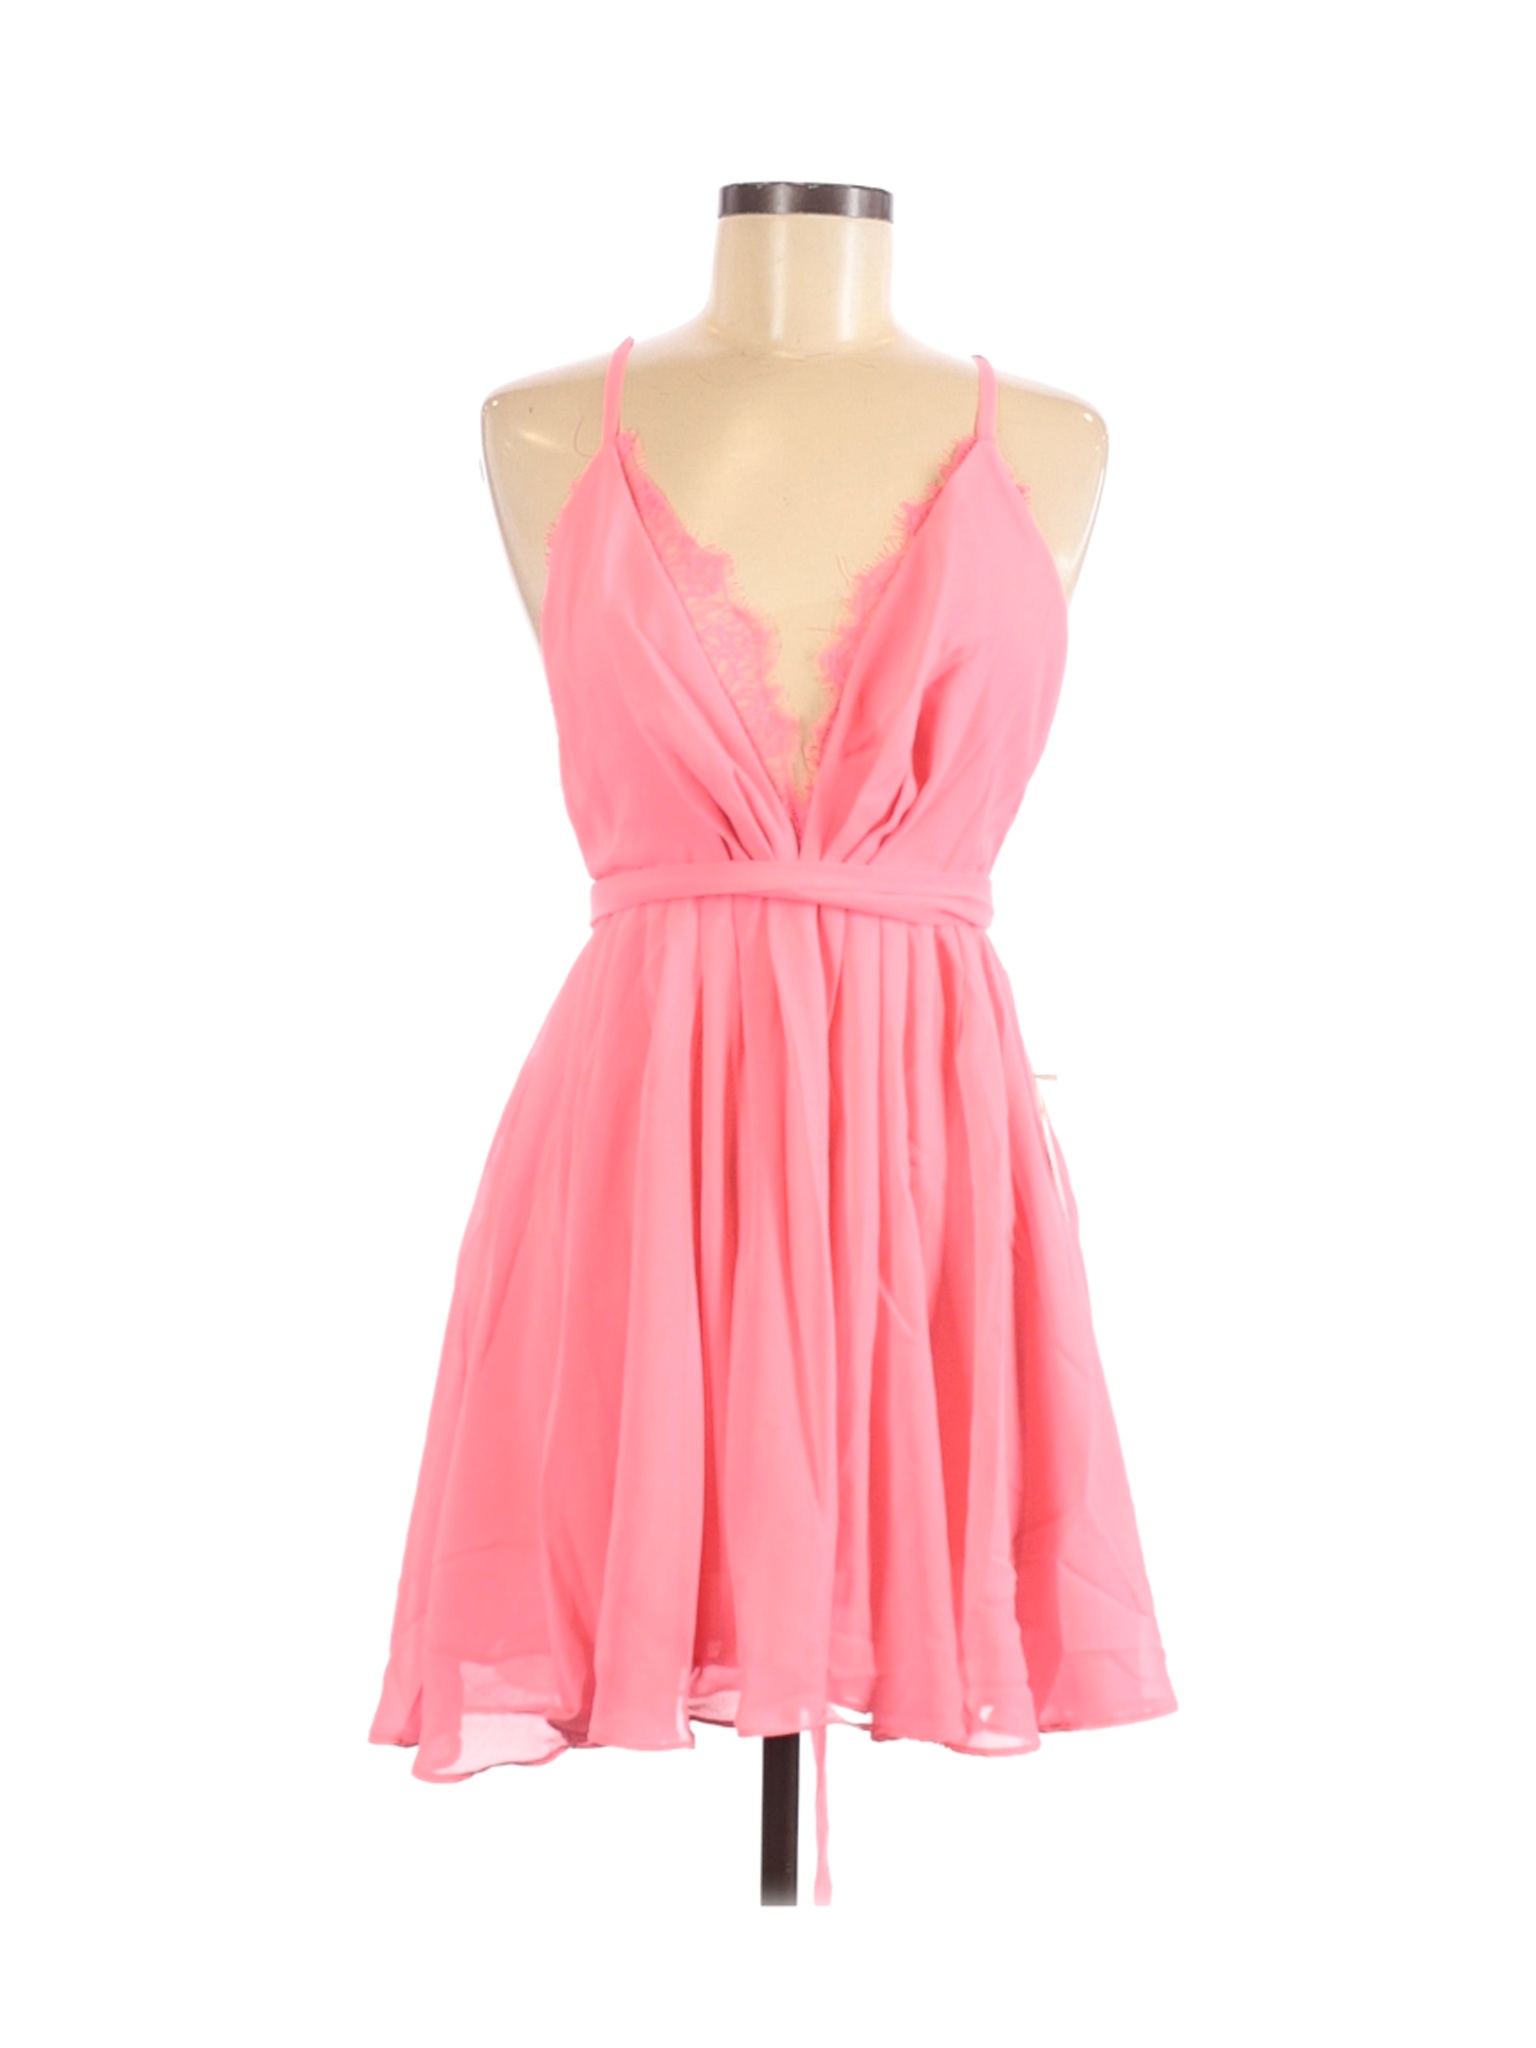 NWT Luxxel Women Pink Cocktail Dress M | eBay